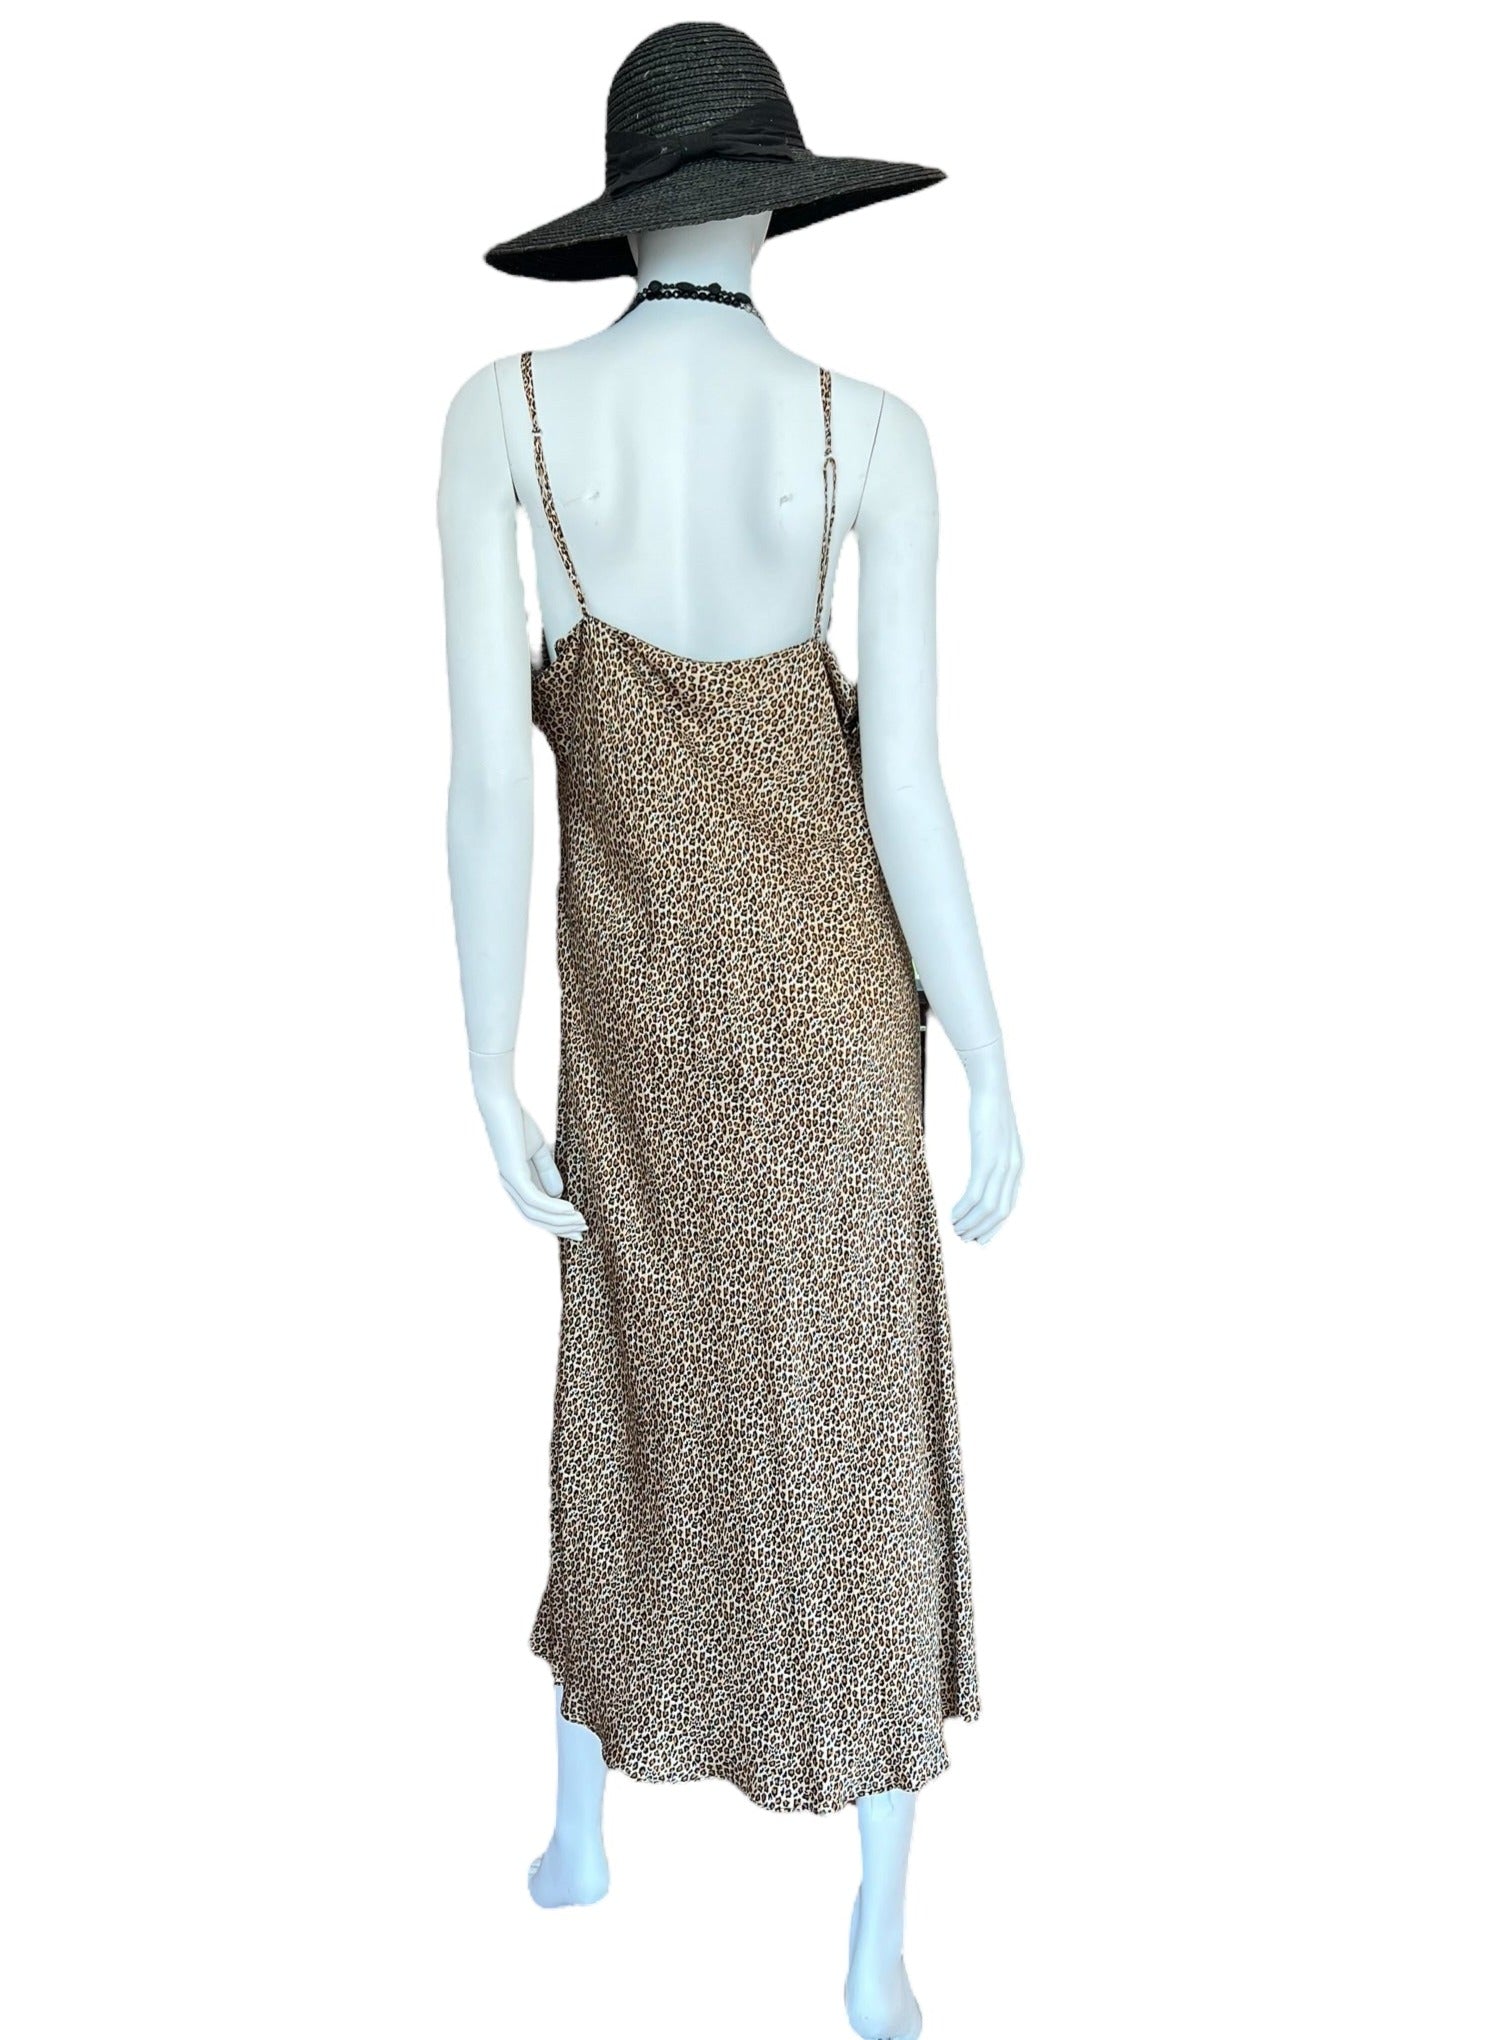 leopard print strappy slip dress, 100% silk vintage find midi length